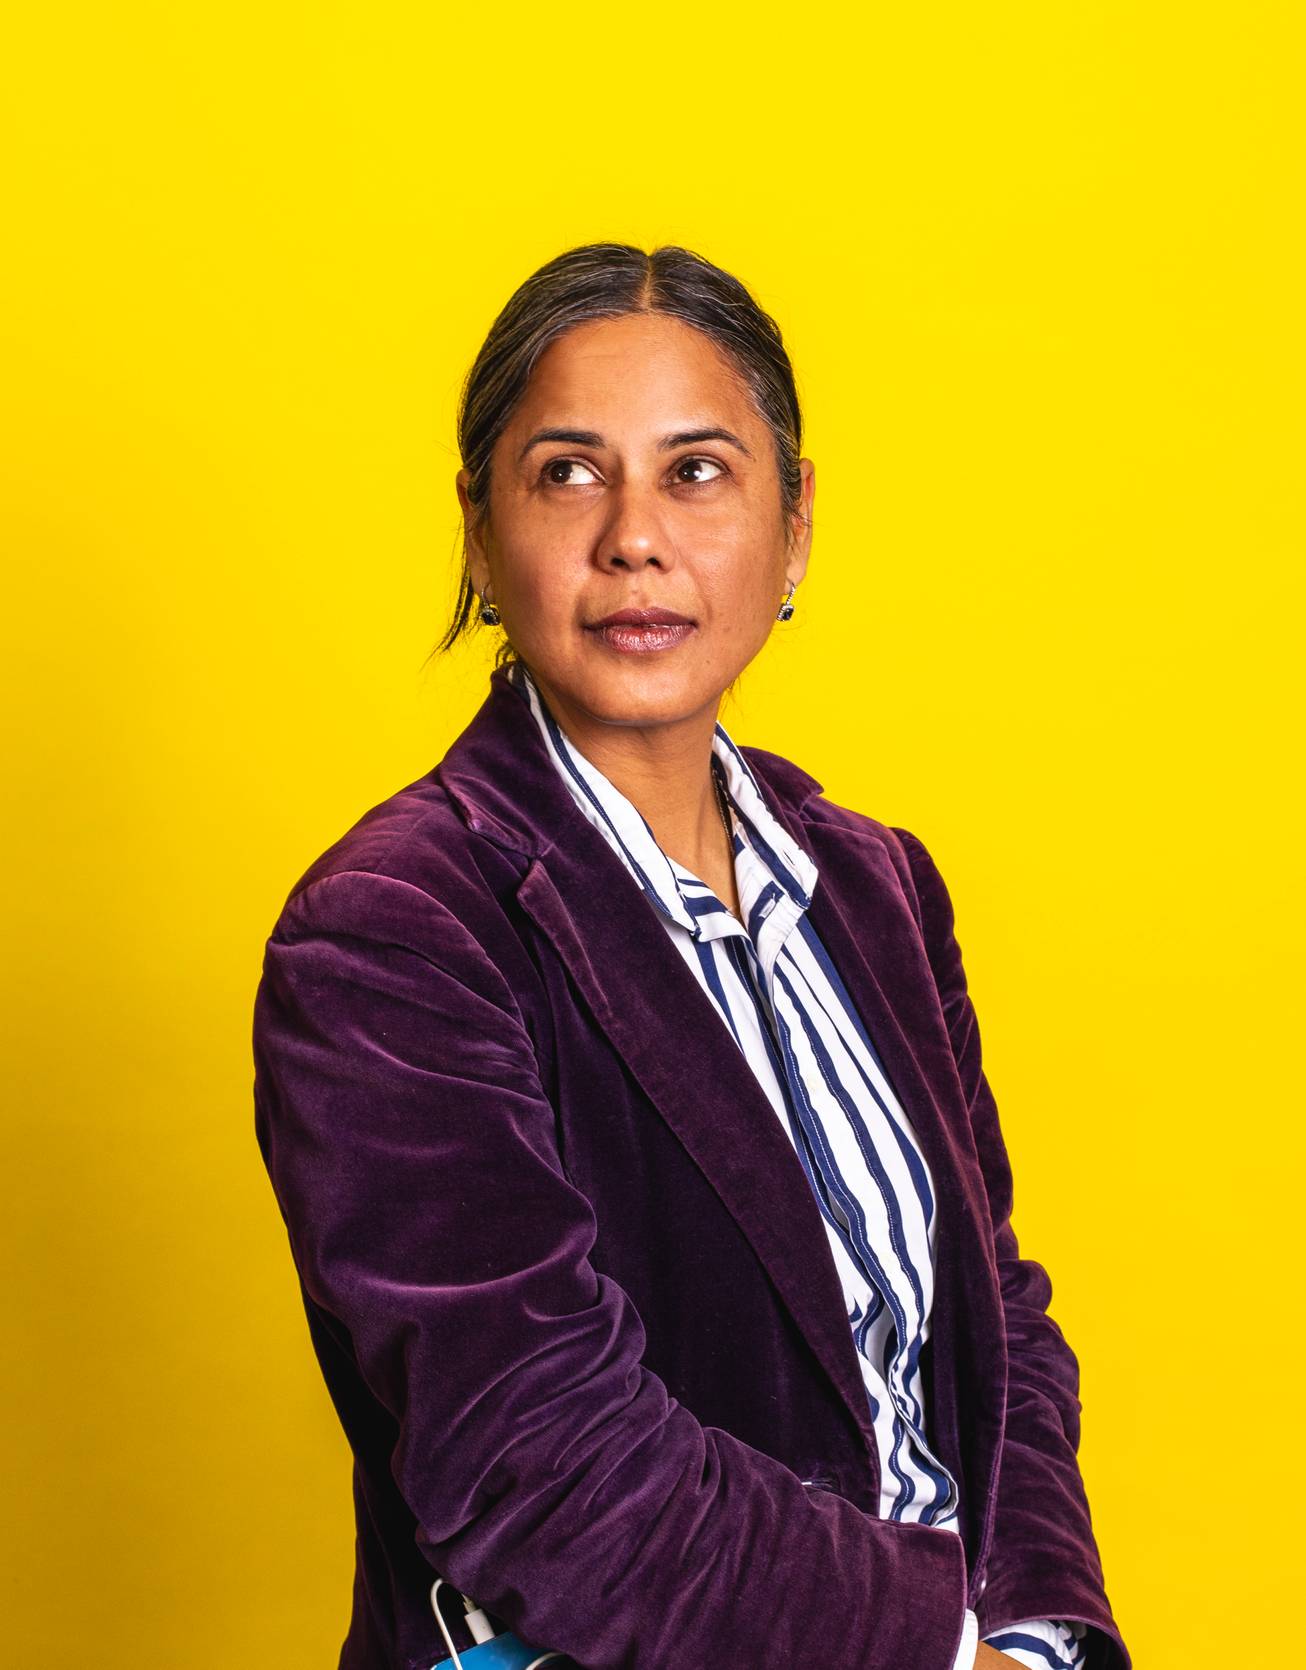 Pallawi Sinha profile photo on yellow background